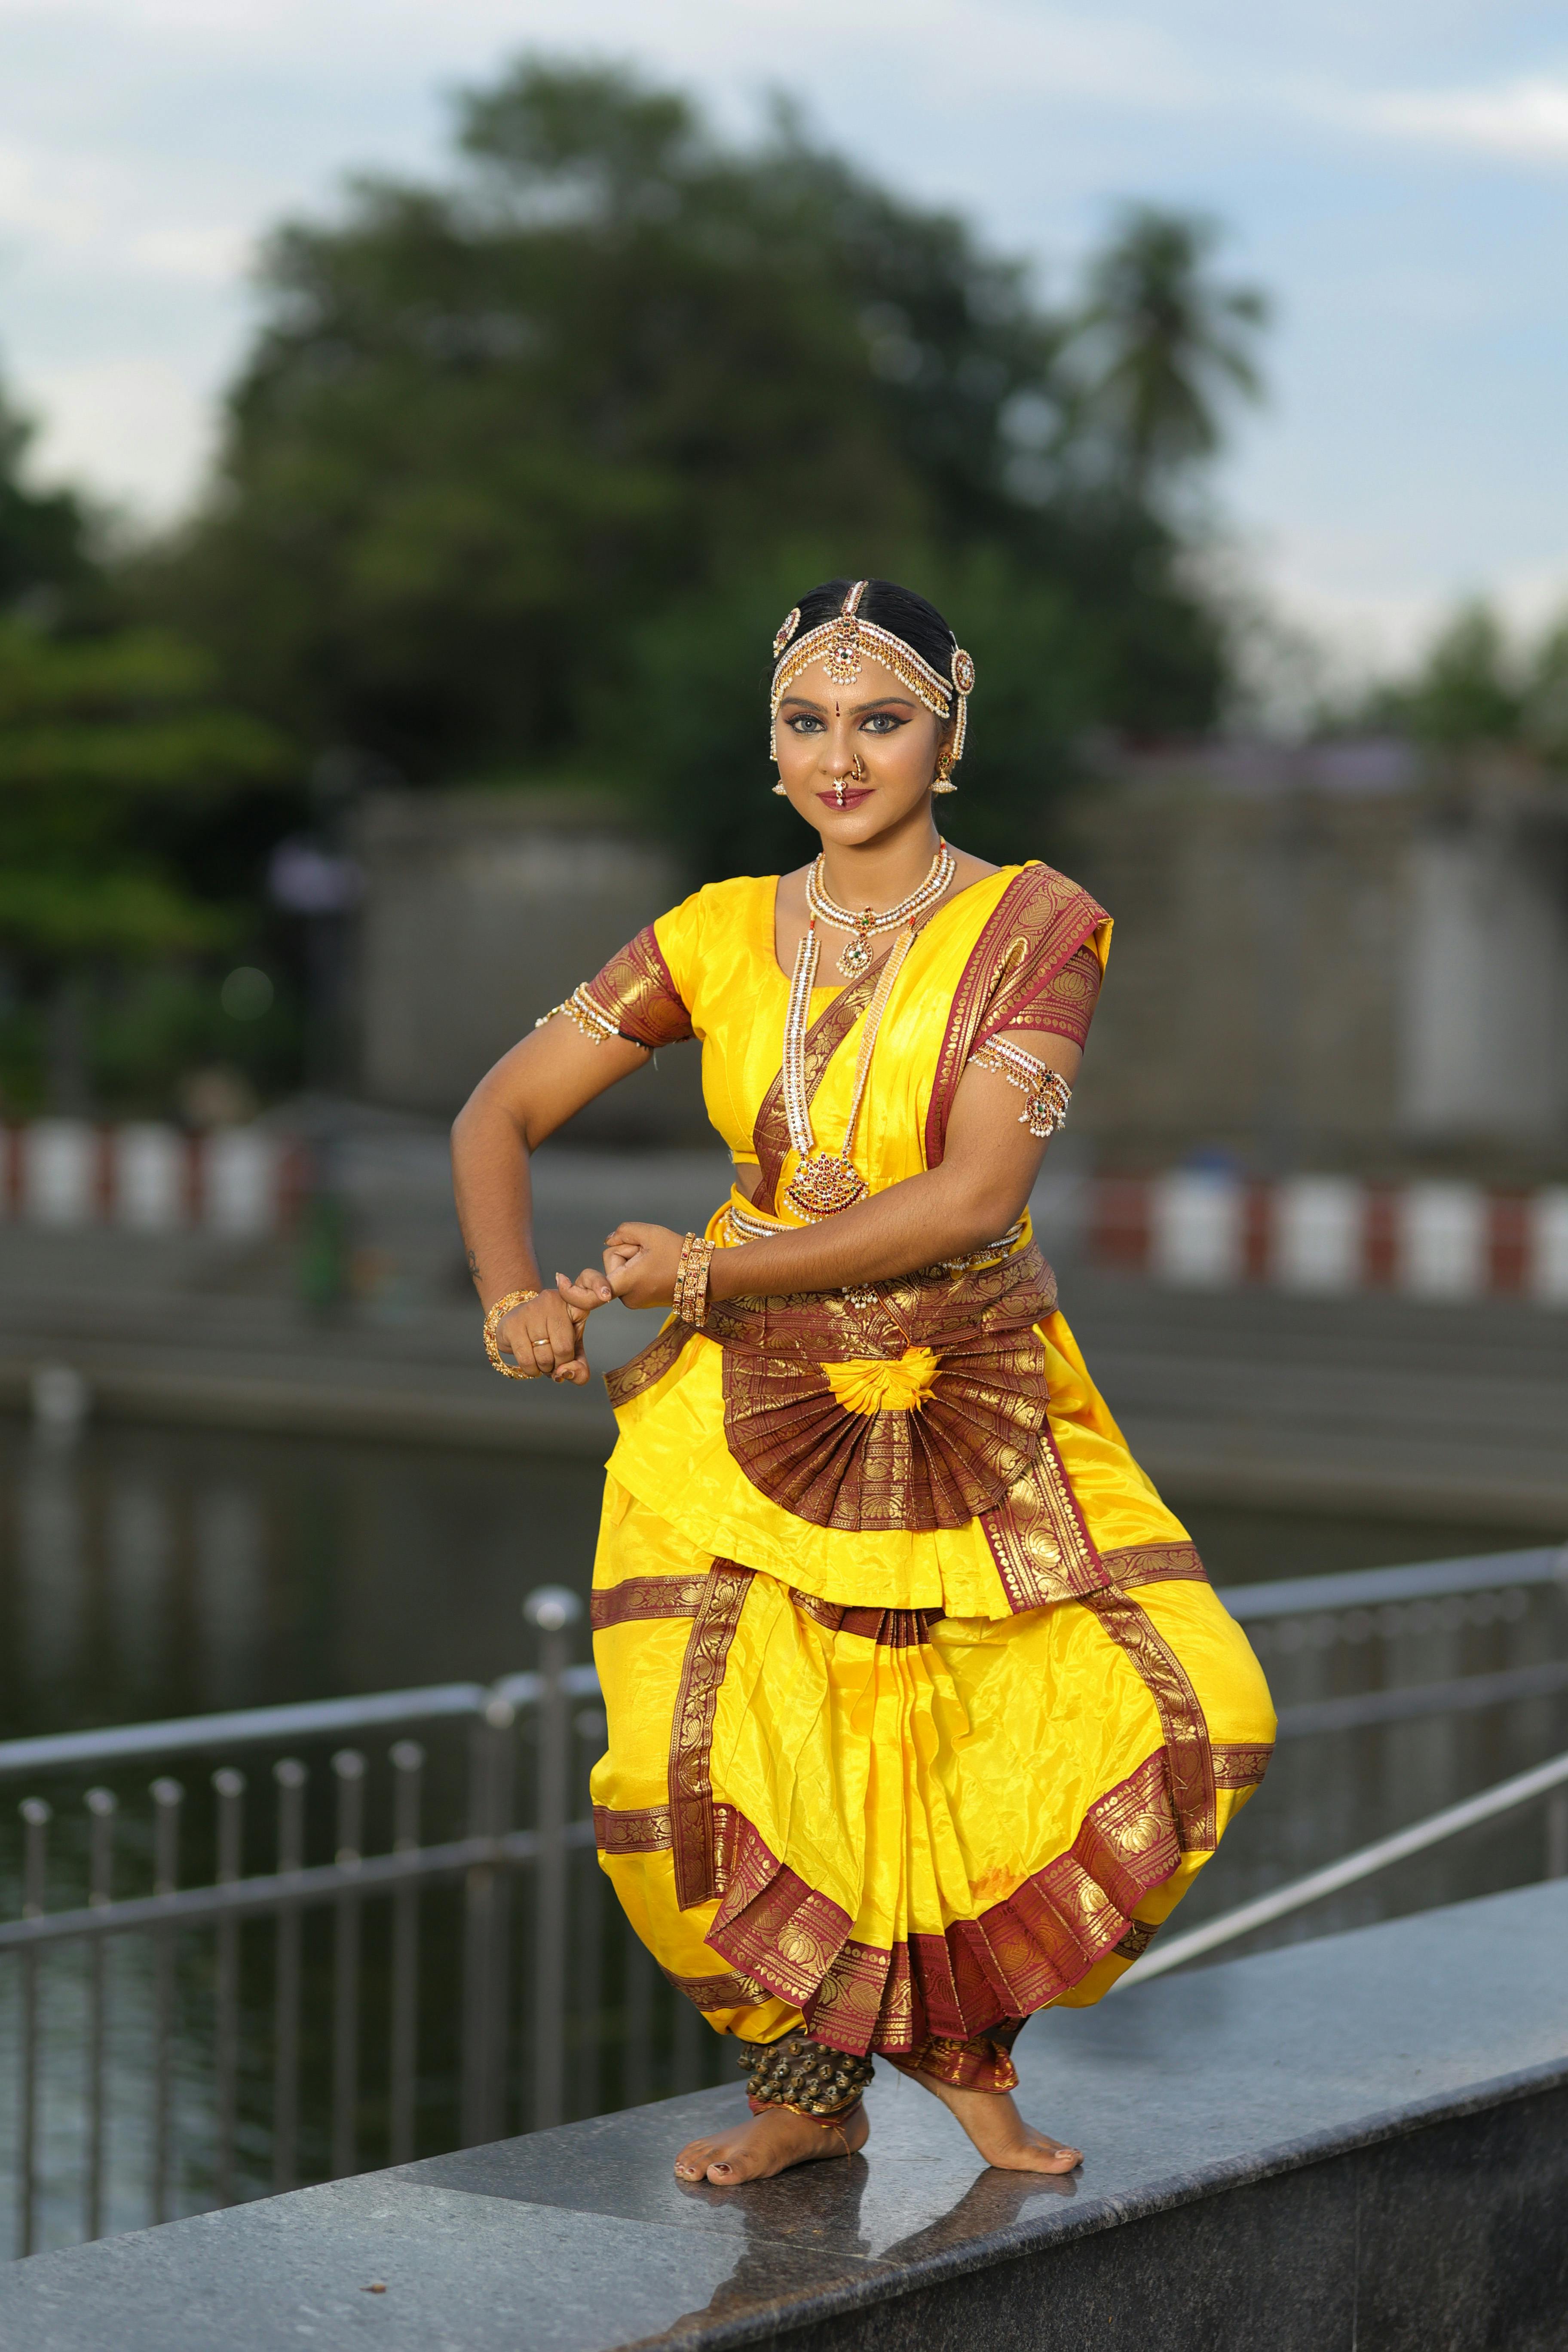 File:Indian-dance-multiple-arms.jpg - Wikipedia